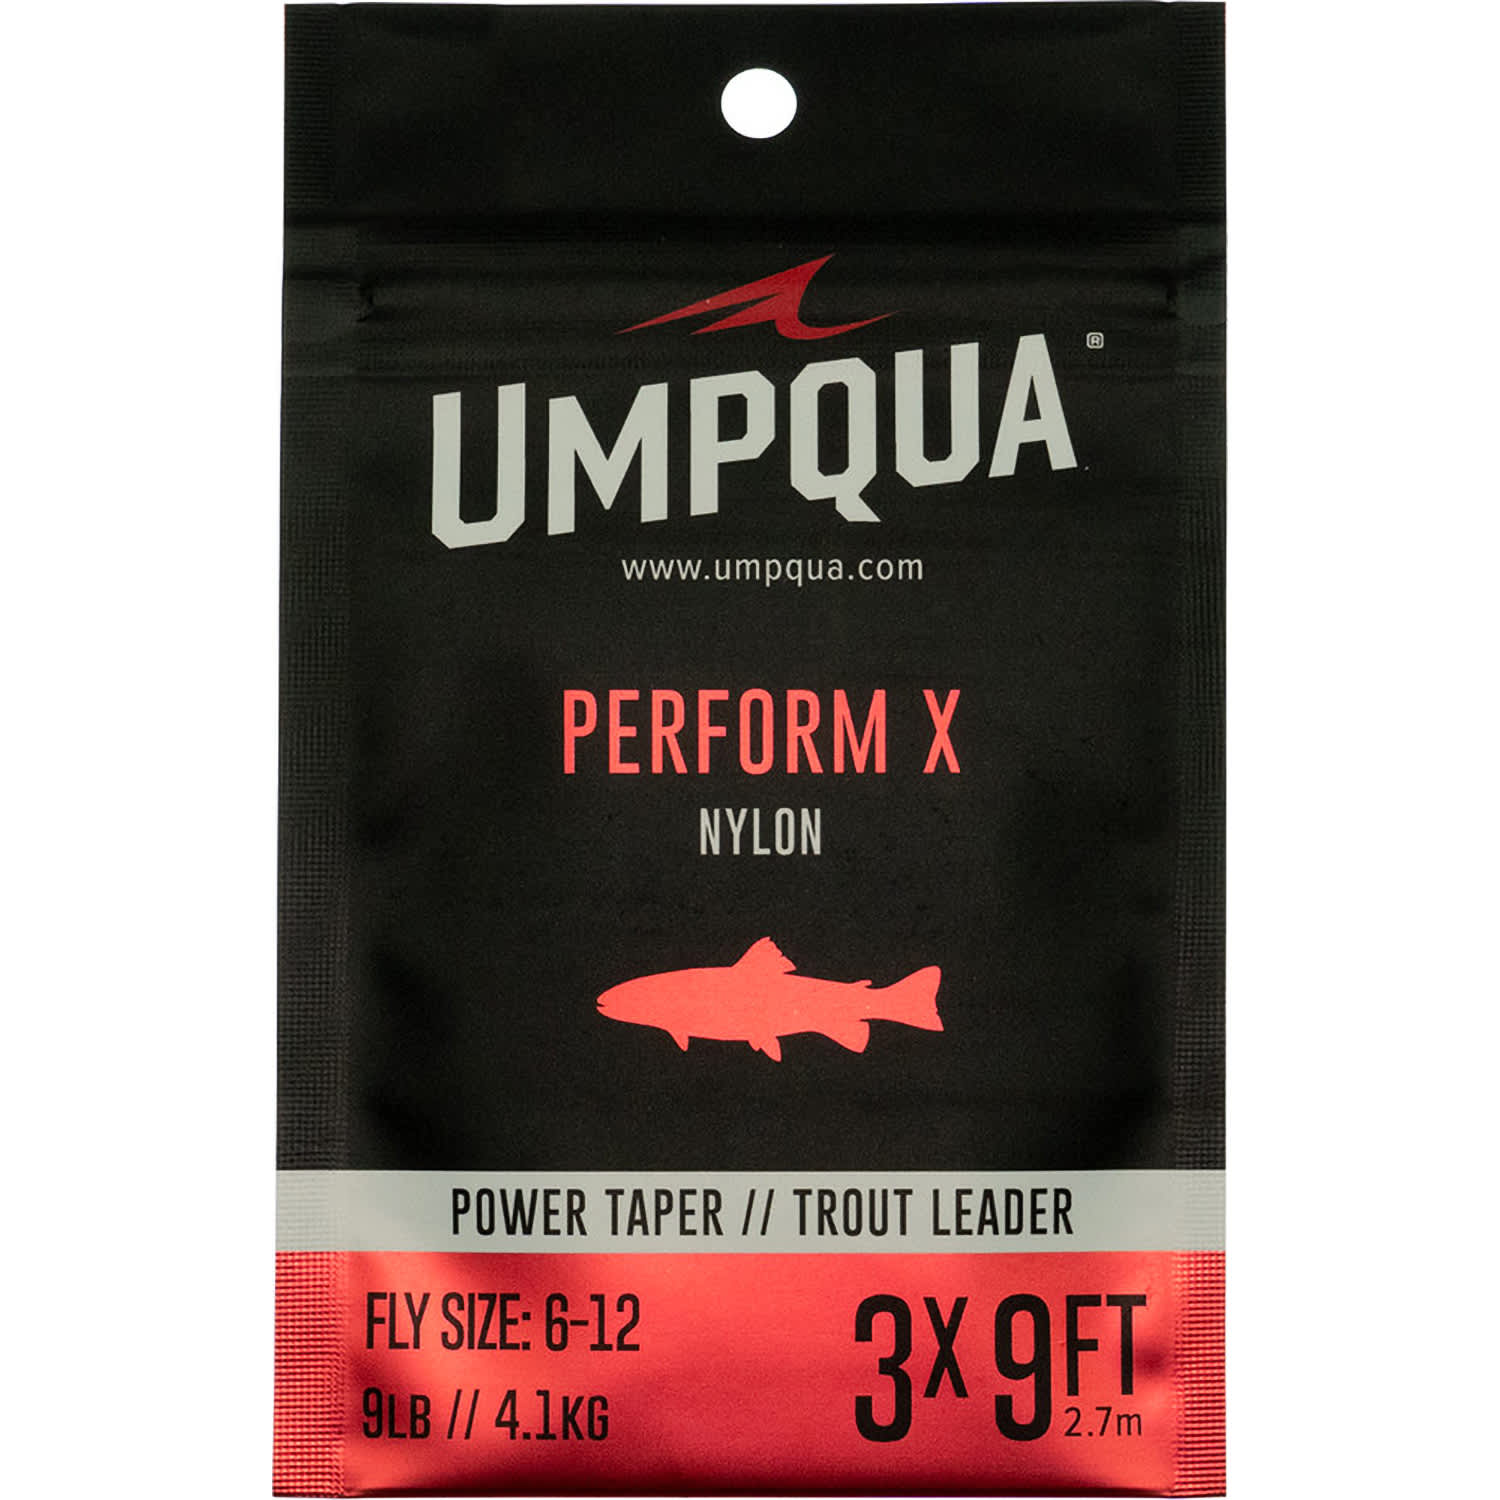 Umpqua Perform X Power Taper Trout Leader